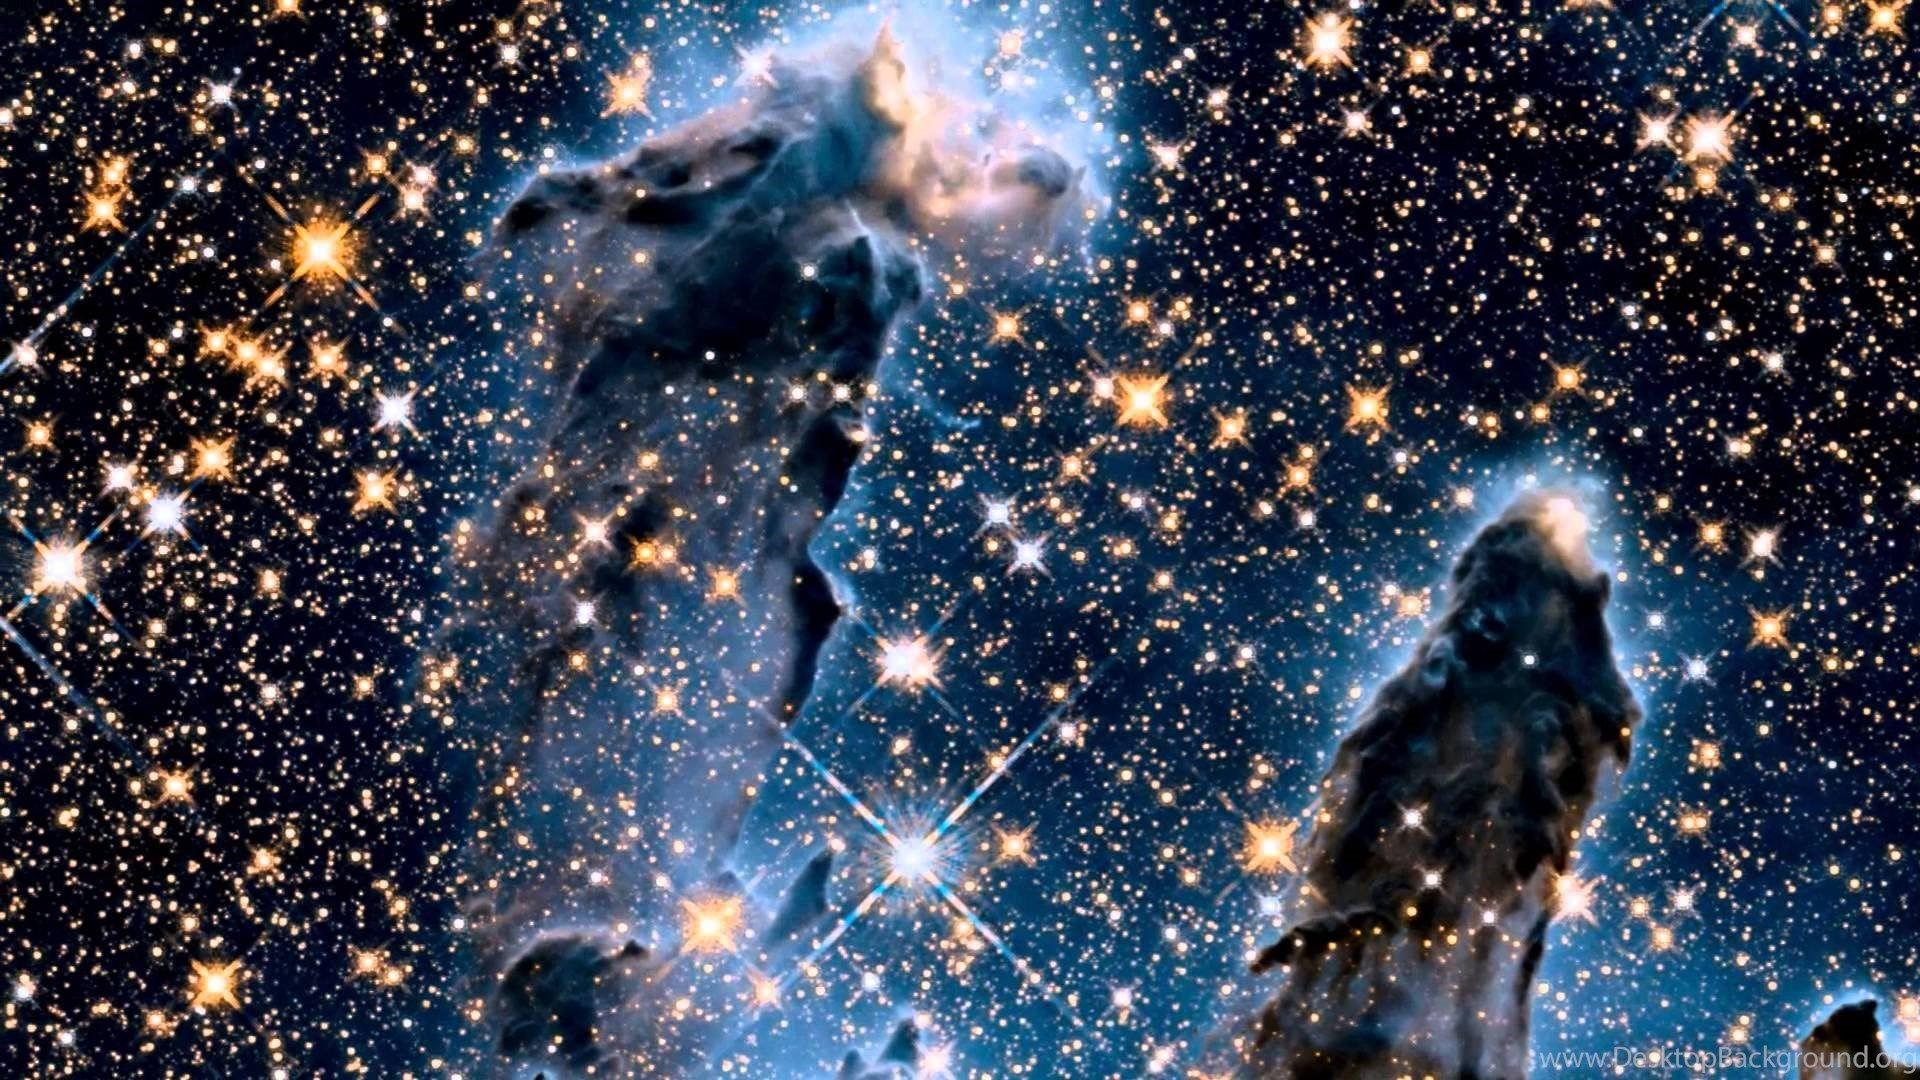 561262 1920x1080 nebula pillars of creation carl sagan quote space wallpaper  JPG 350 kB  Rare Gallery HD Wallpapers